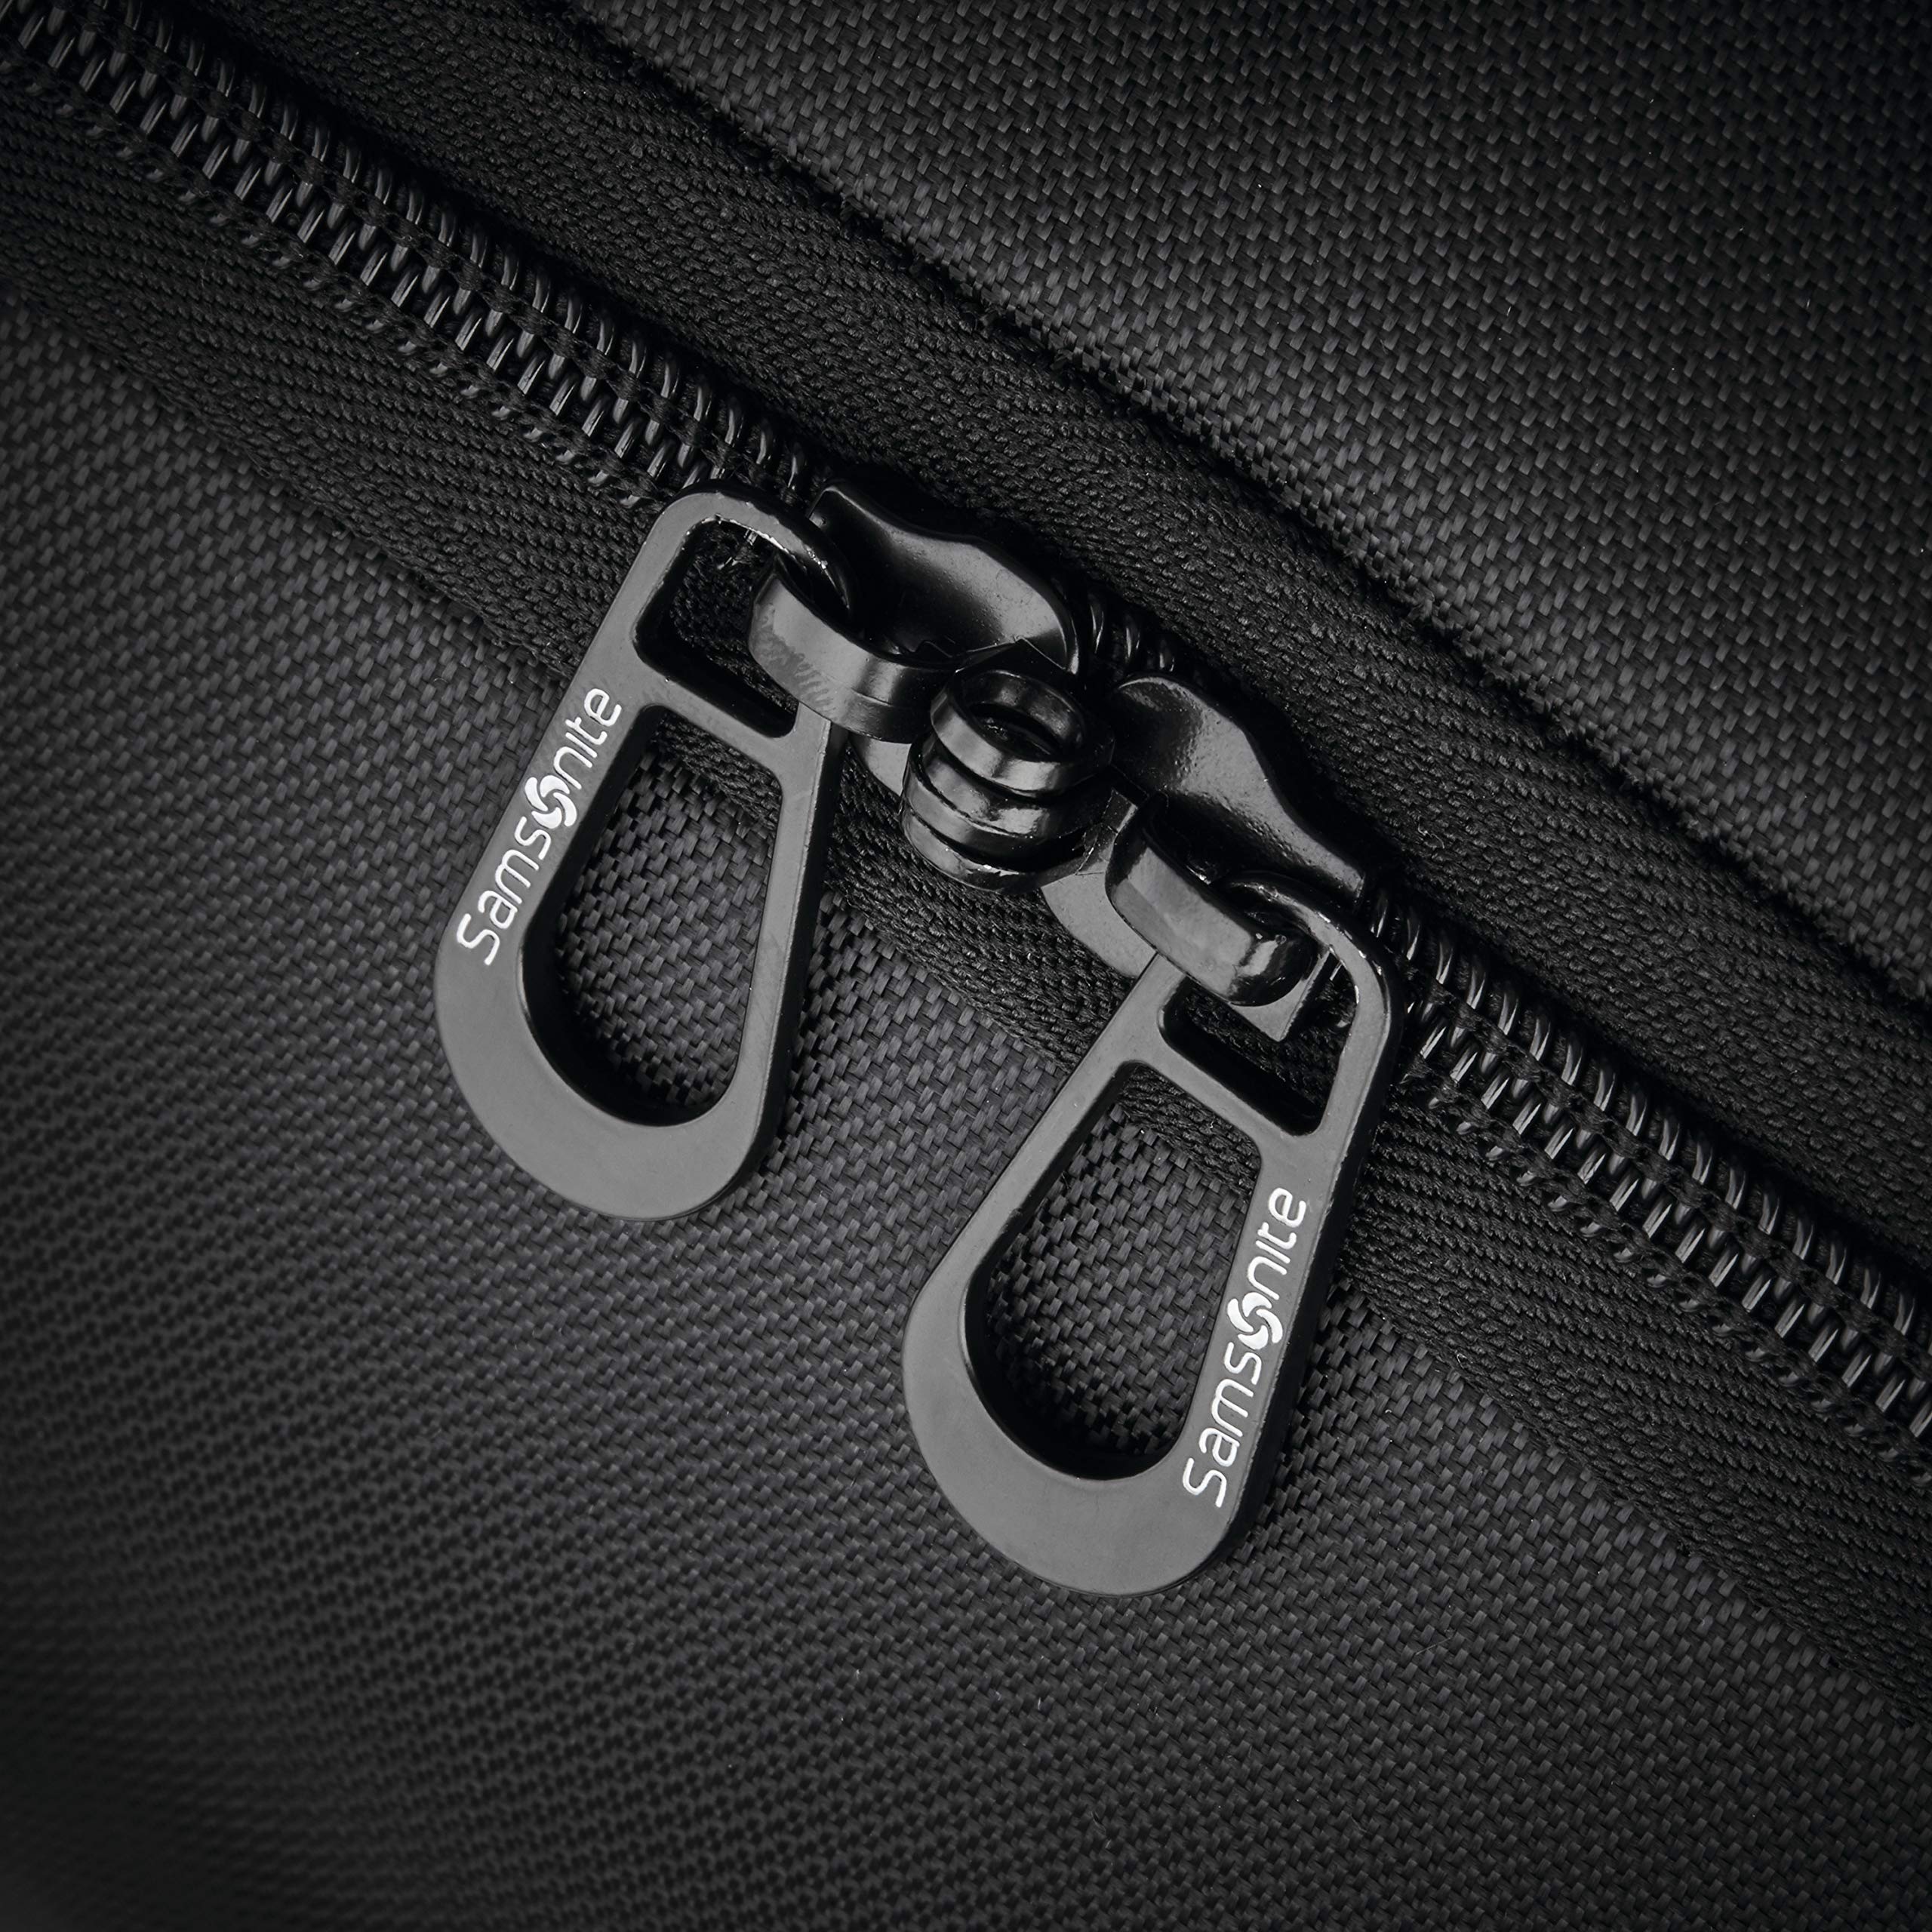 SAMSONITE - Weekender Overnight Travel Bag Luggage | eBay